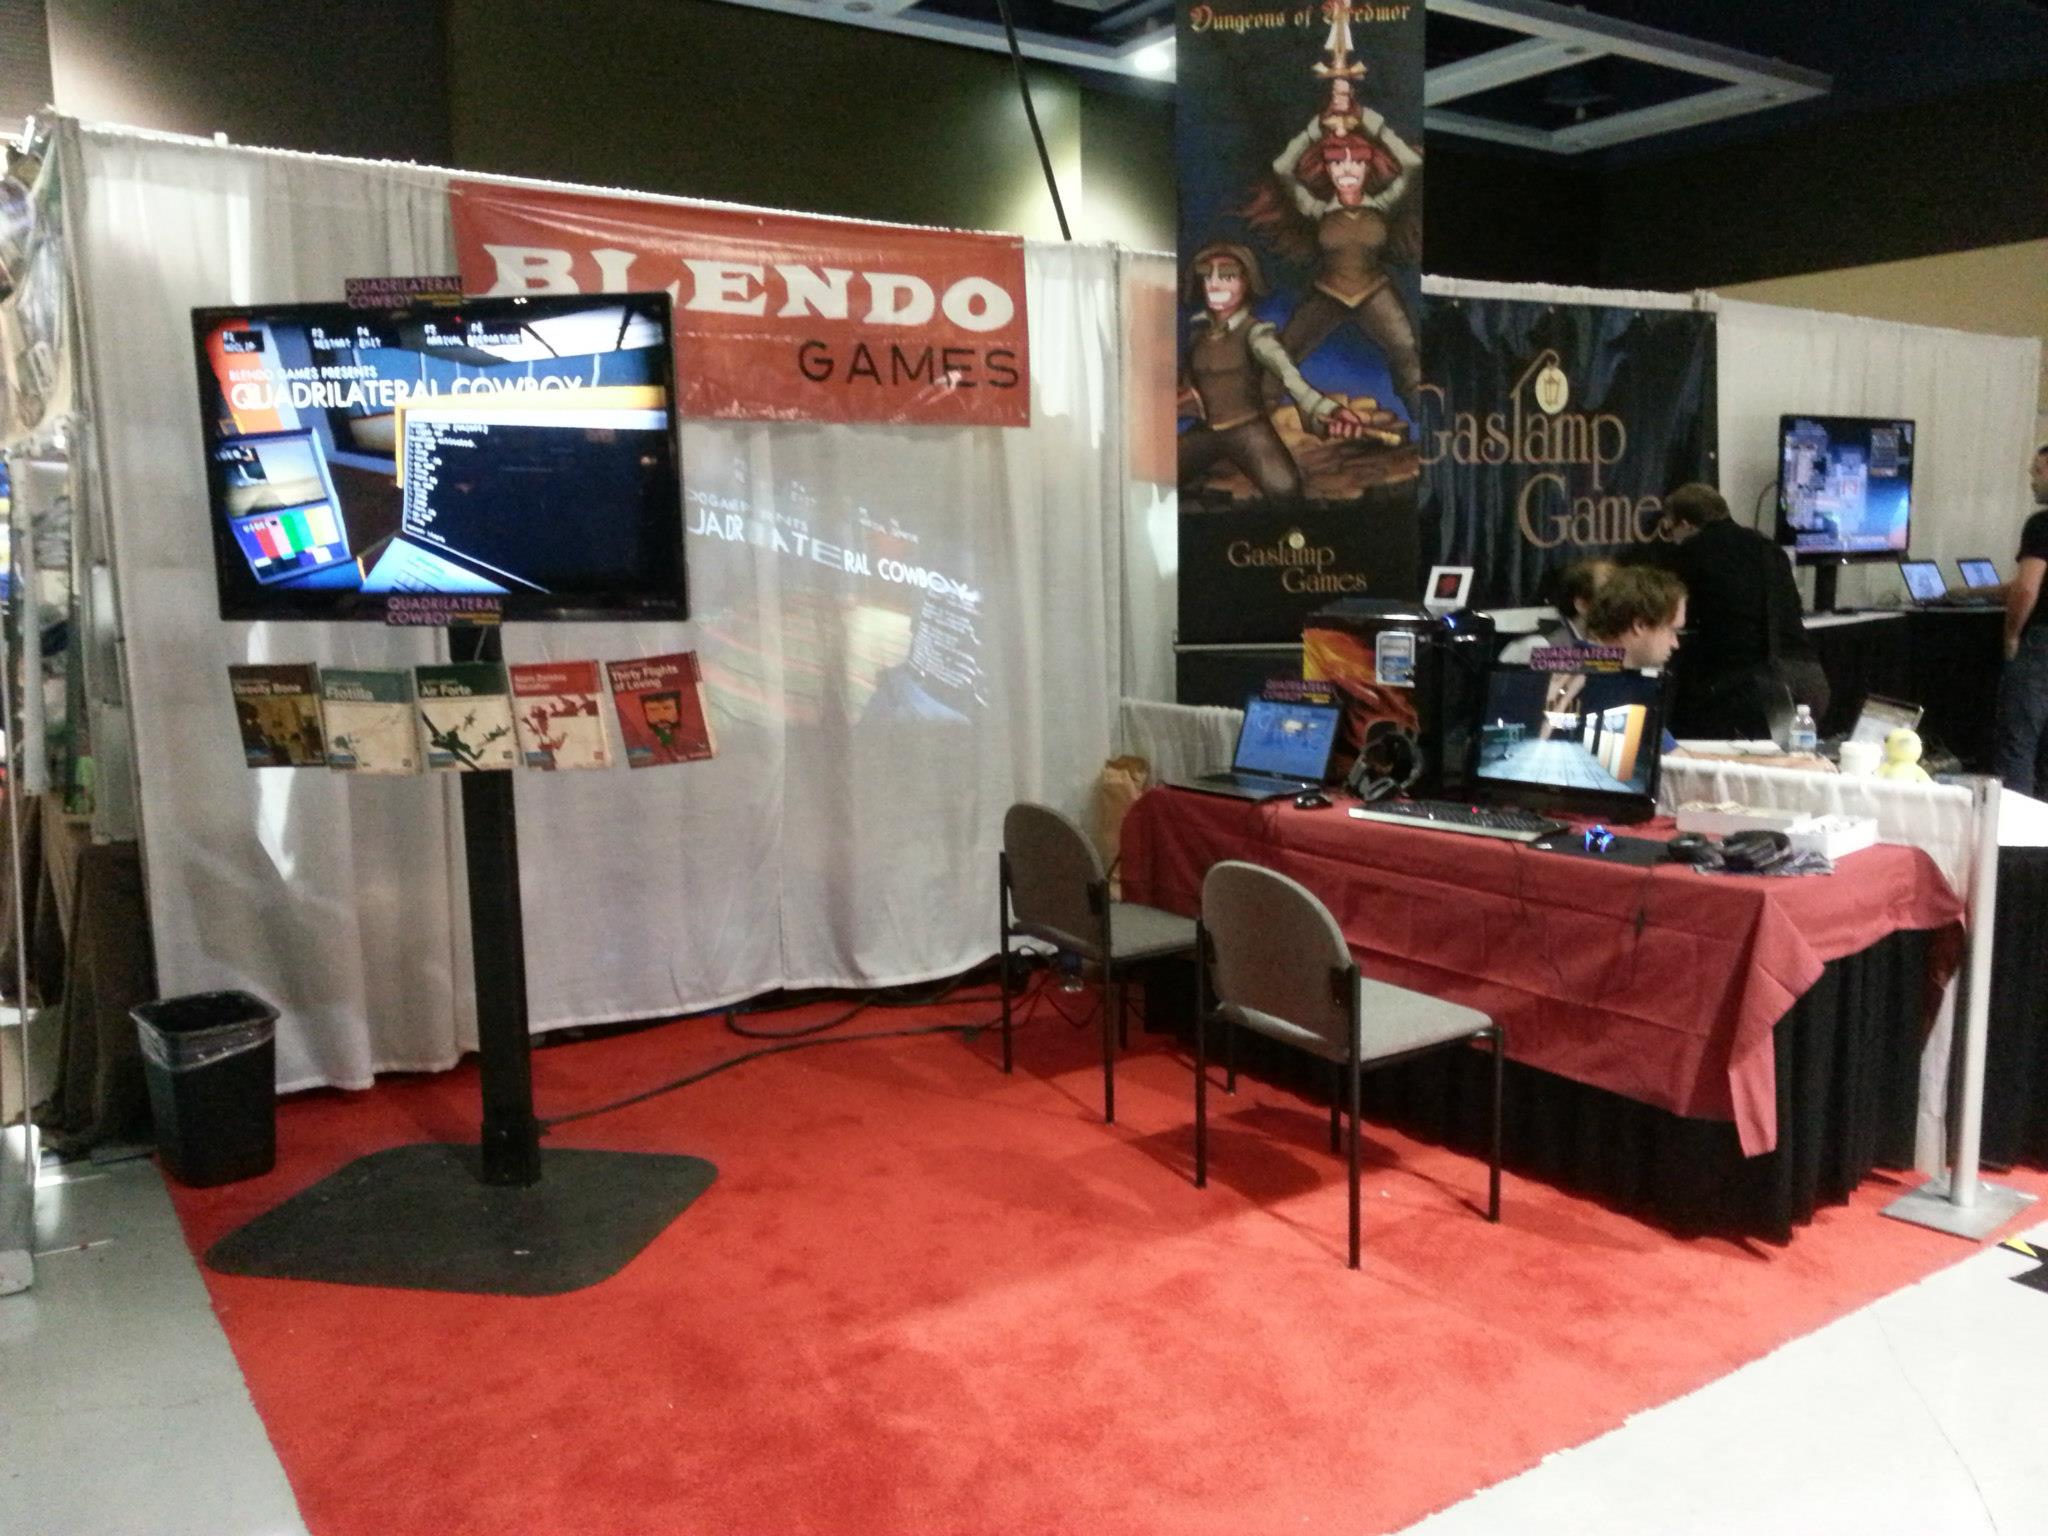 Blendo Games at PAX Prime 2012